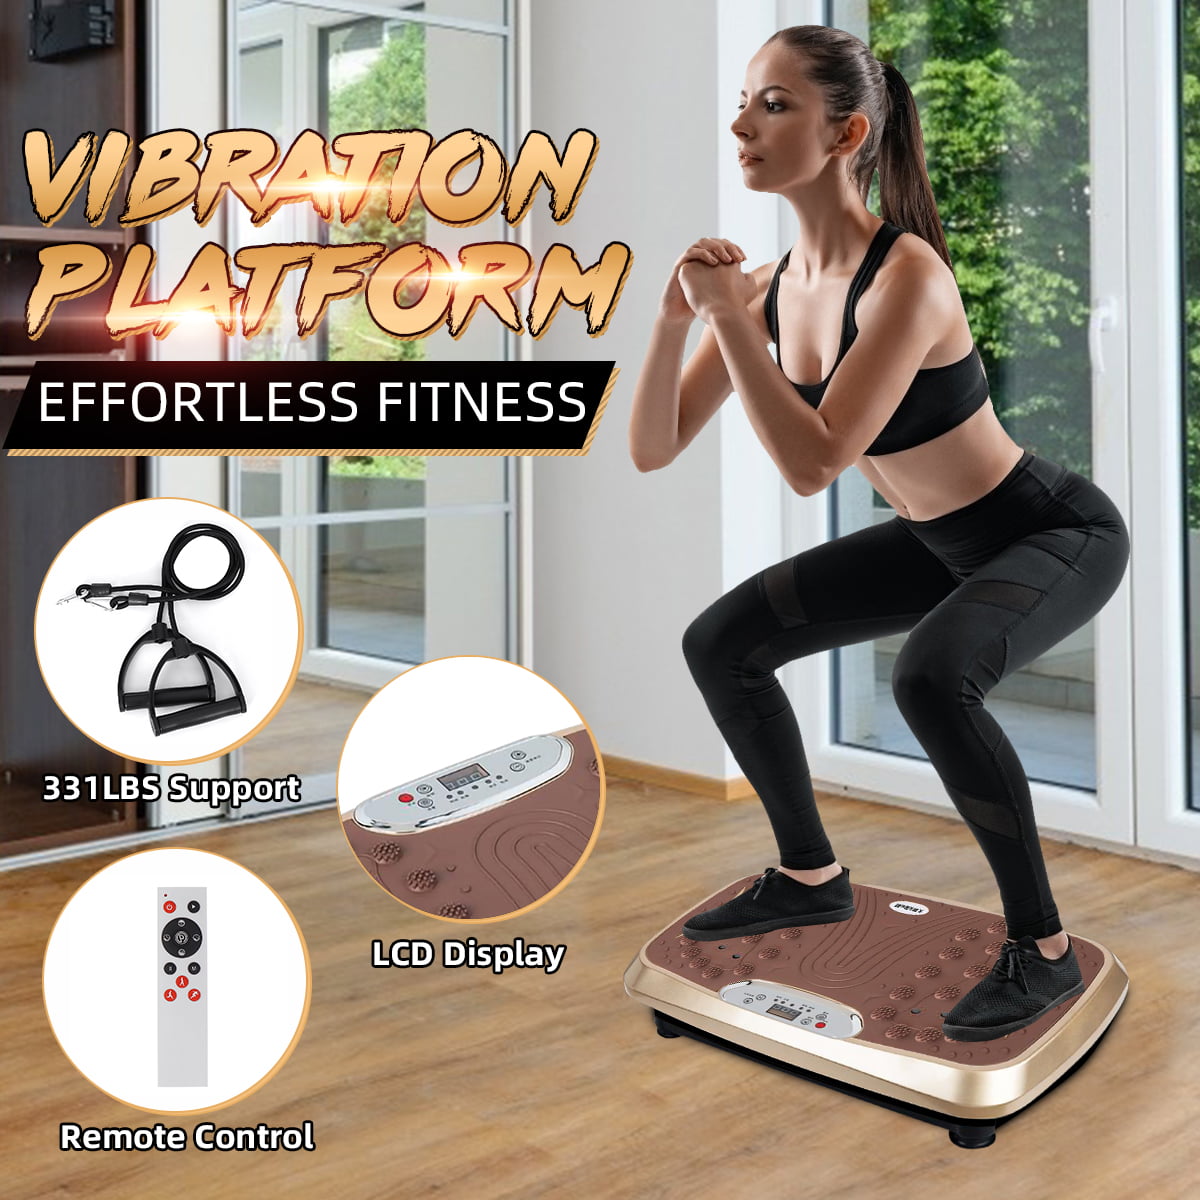 Hurtle Standing Vibration Platform Exercise Machine for sale online 